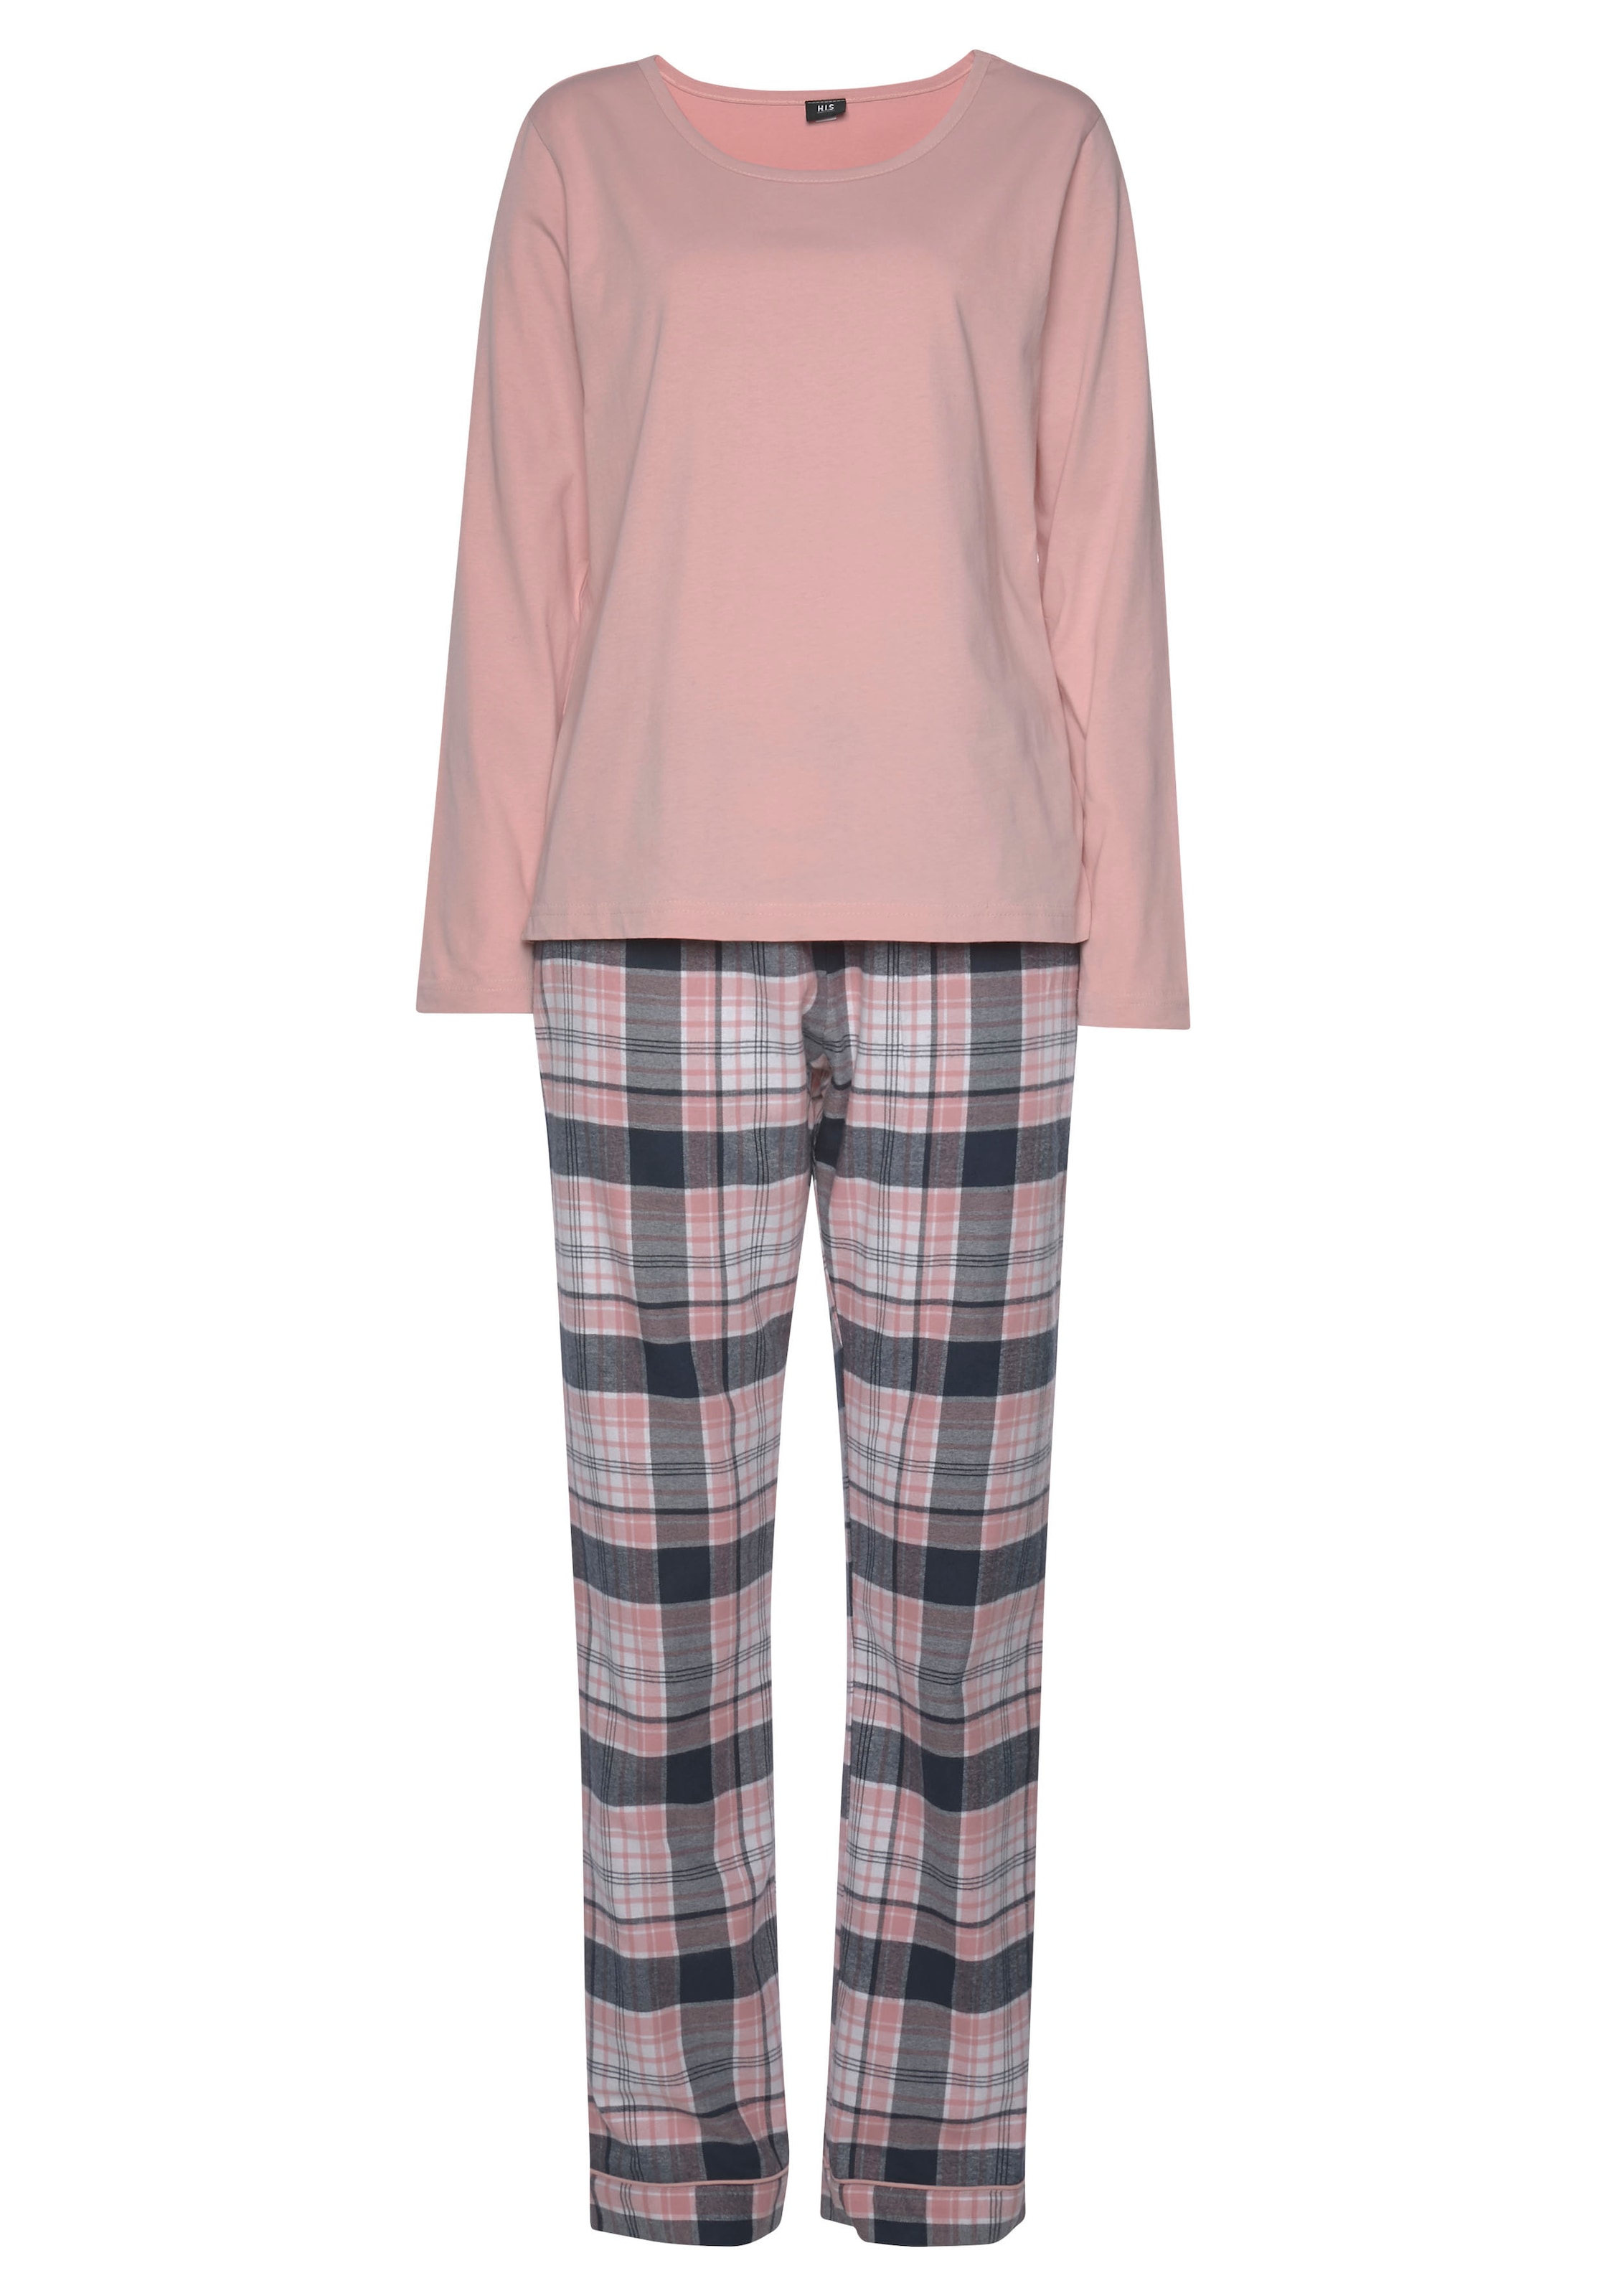 bei online Bestellen Sie LASCANA Pyjamas Pyjamas |